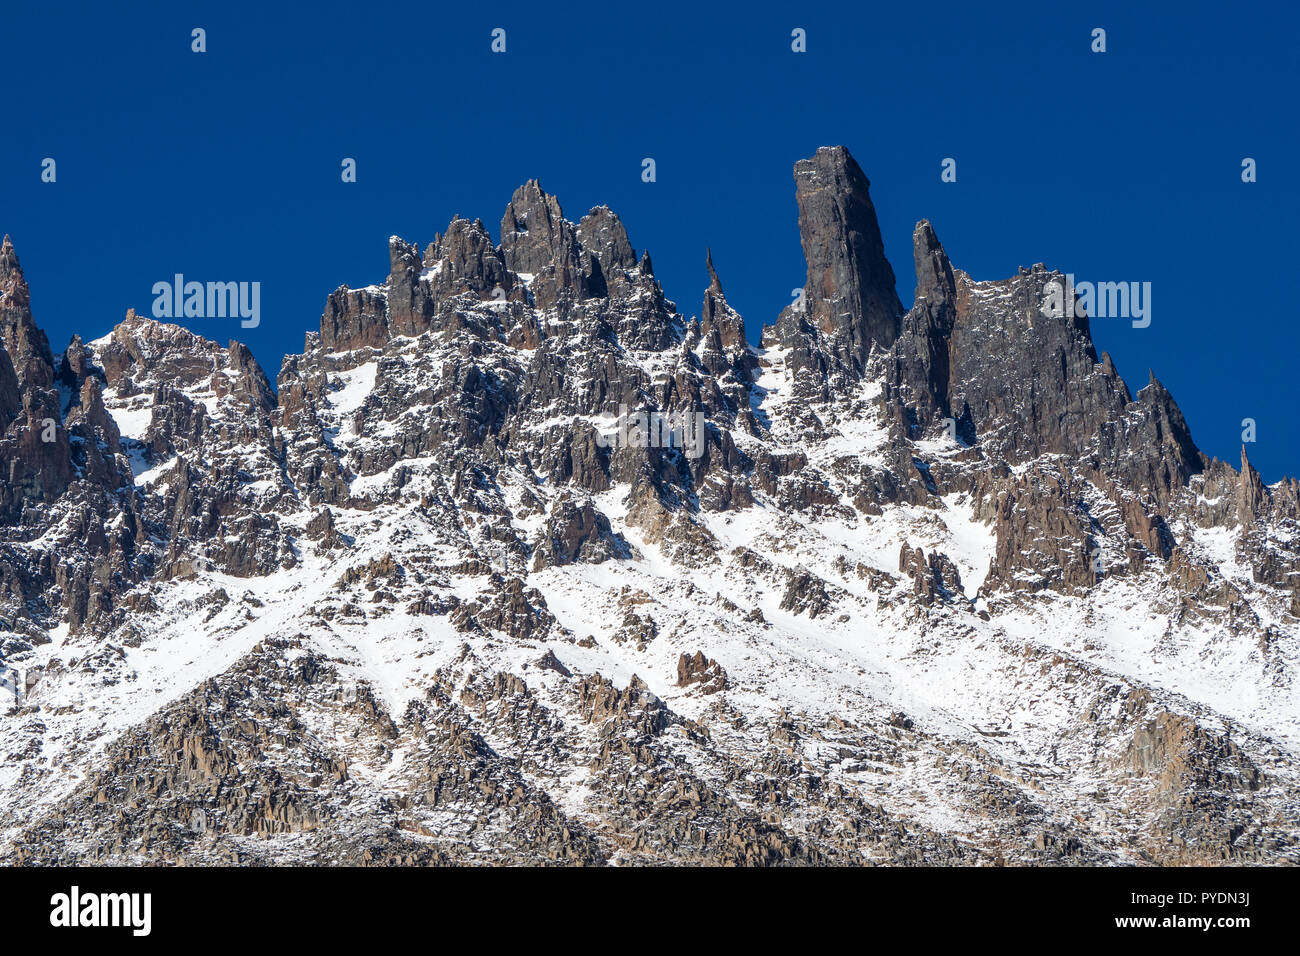 Close detail of the top of Cerro Castillo in Carretera austral in chile - Patagonia Snow Stock Photo